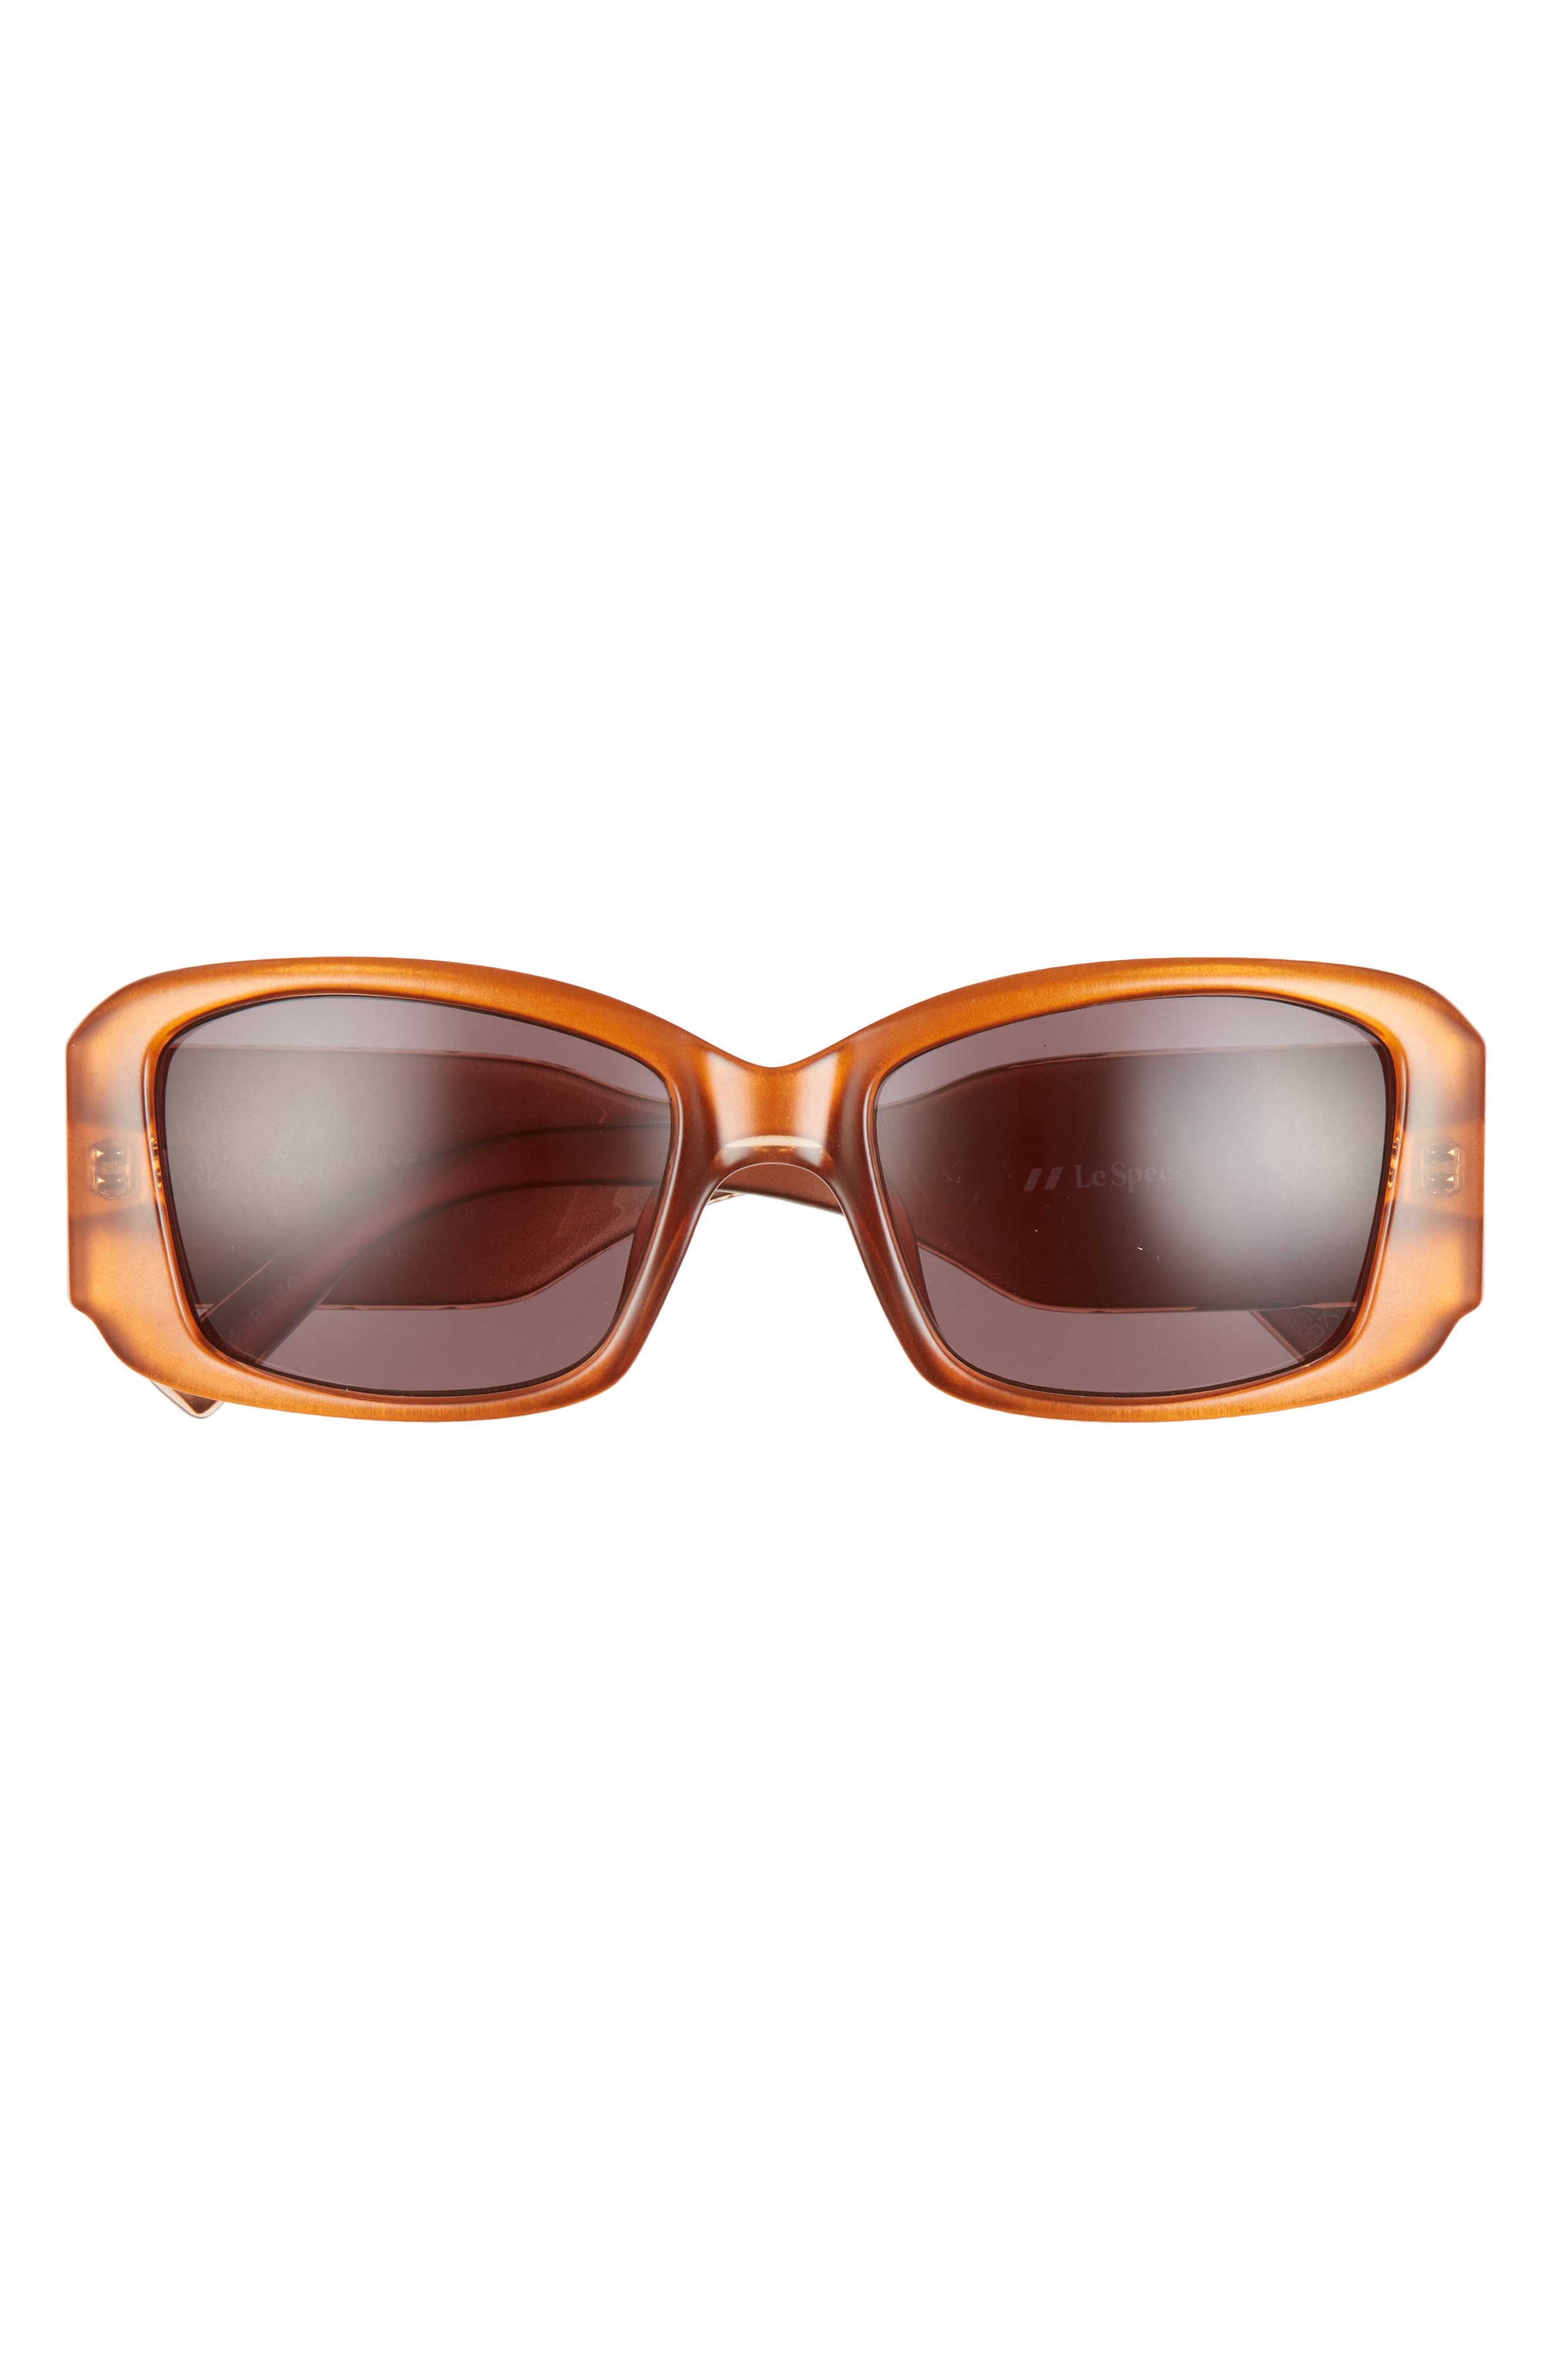 Le Specs Nouveau Riche 54mm Rectangular Sunglasses in Caramel/Smokey Brown Mono at Nordstrom